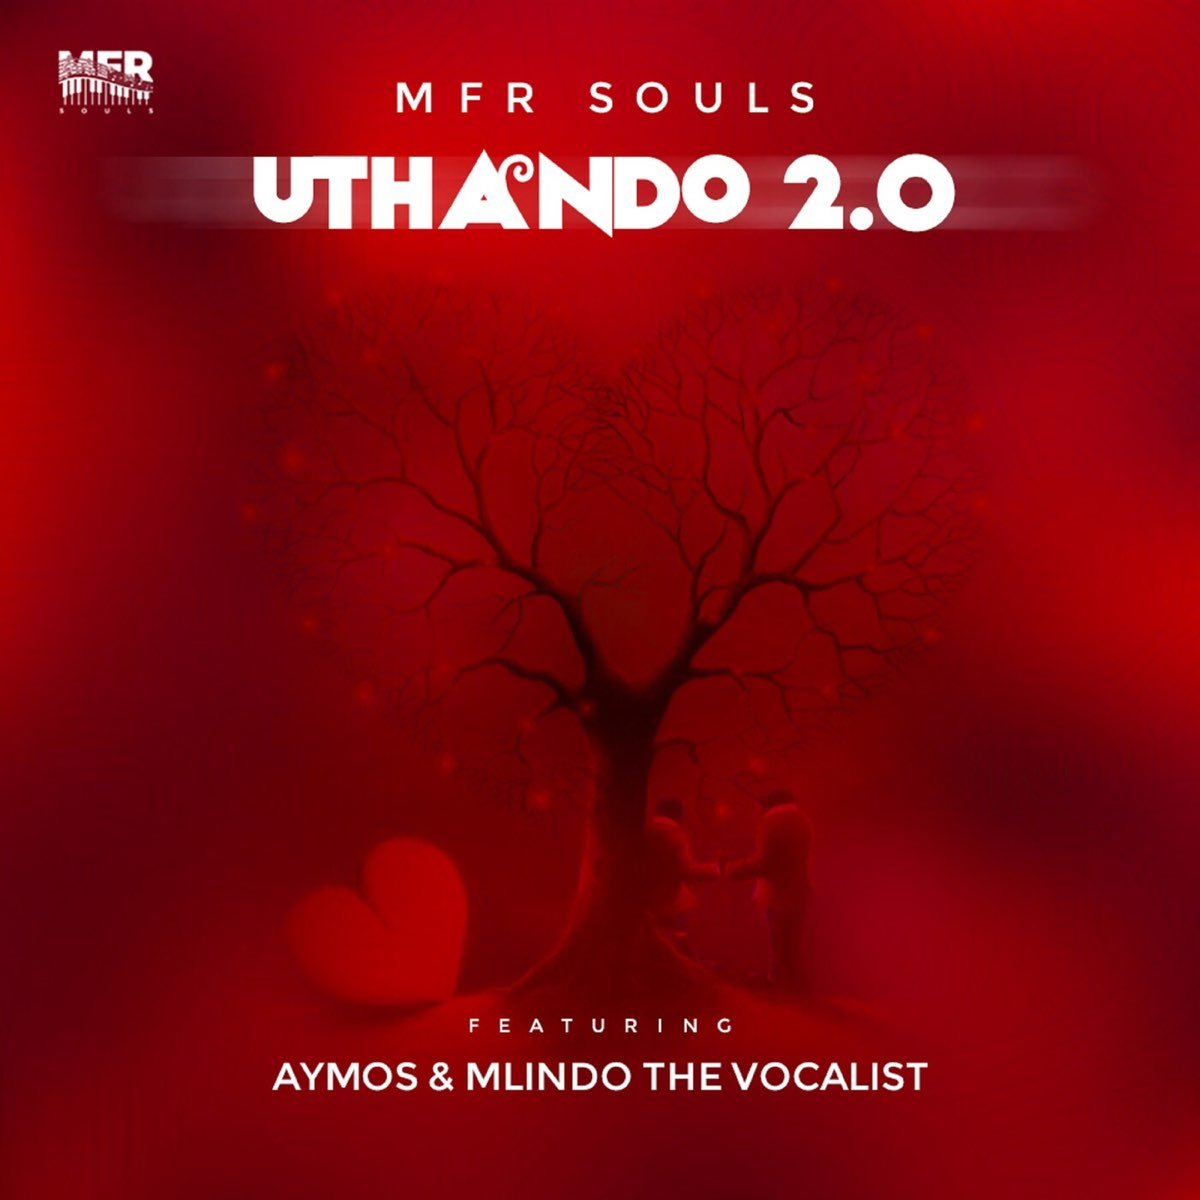 MFR Souls - uThando 2.0 (feat. Aymos & Mlindo The Vocalist) mp3 download free lyrics